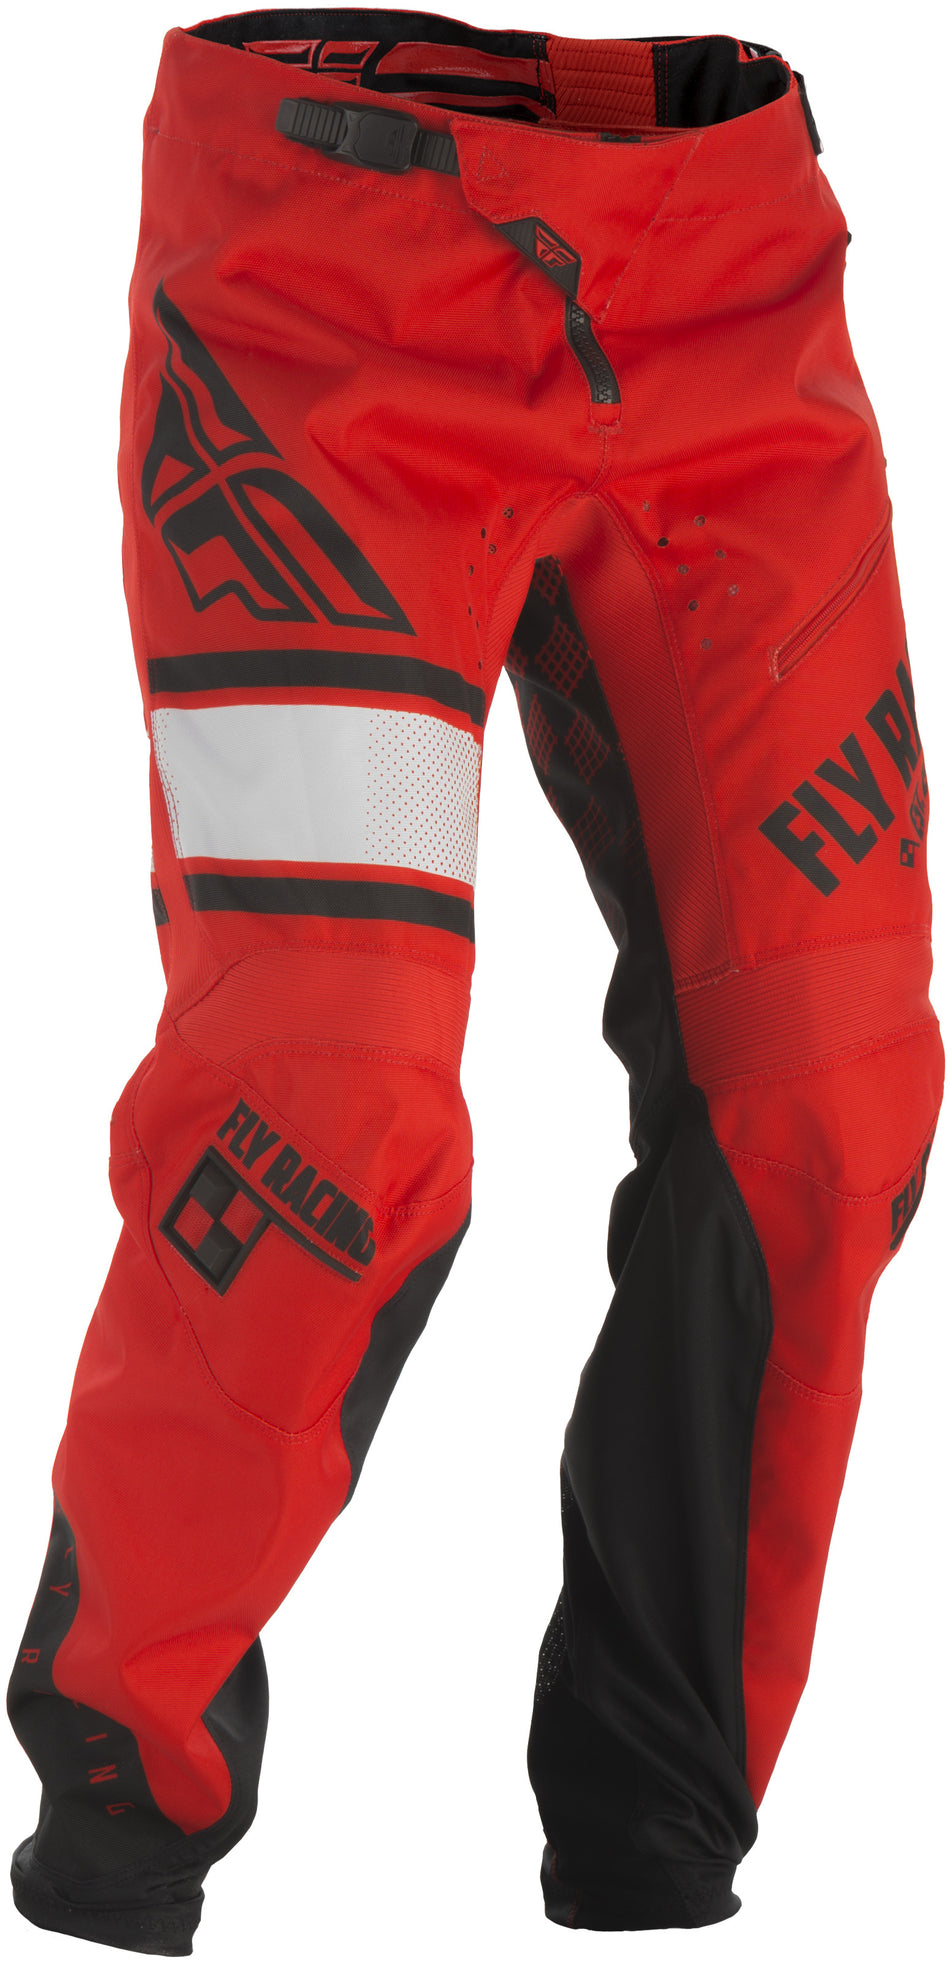 FLY RACING Kinetic Era Bicycle Pants Red/Black Sz 34 371-02234